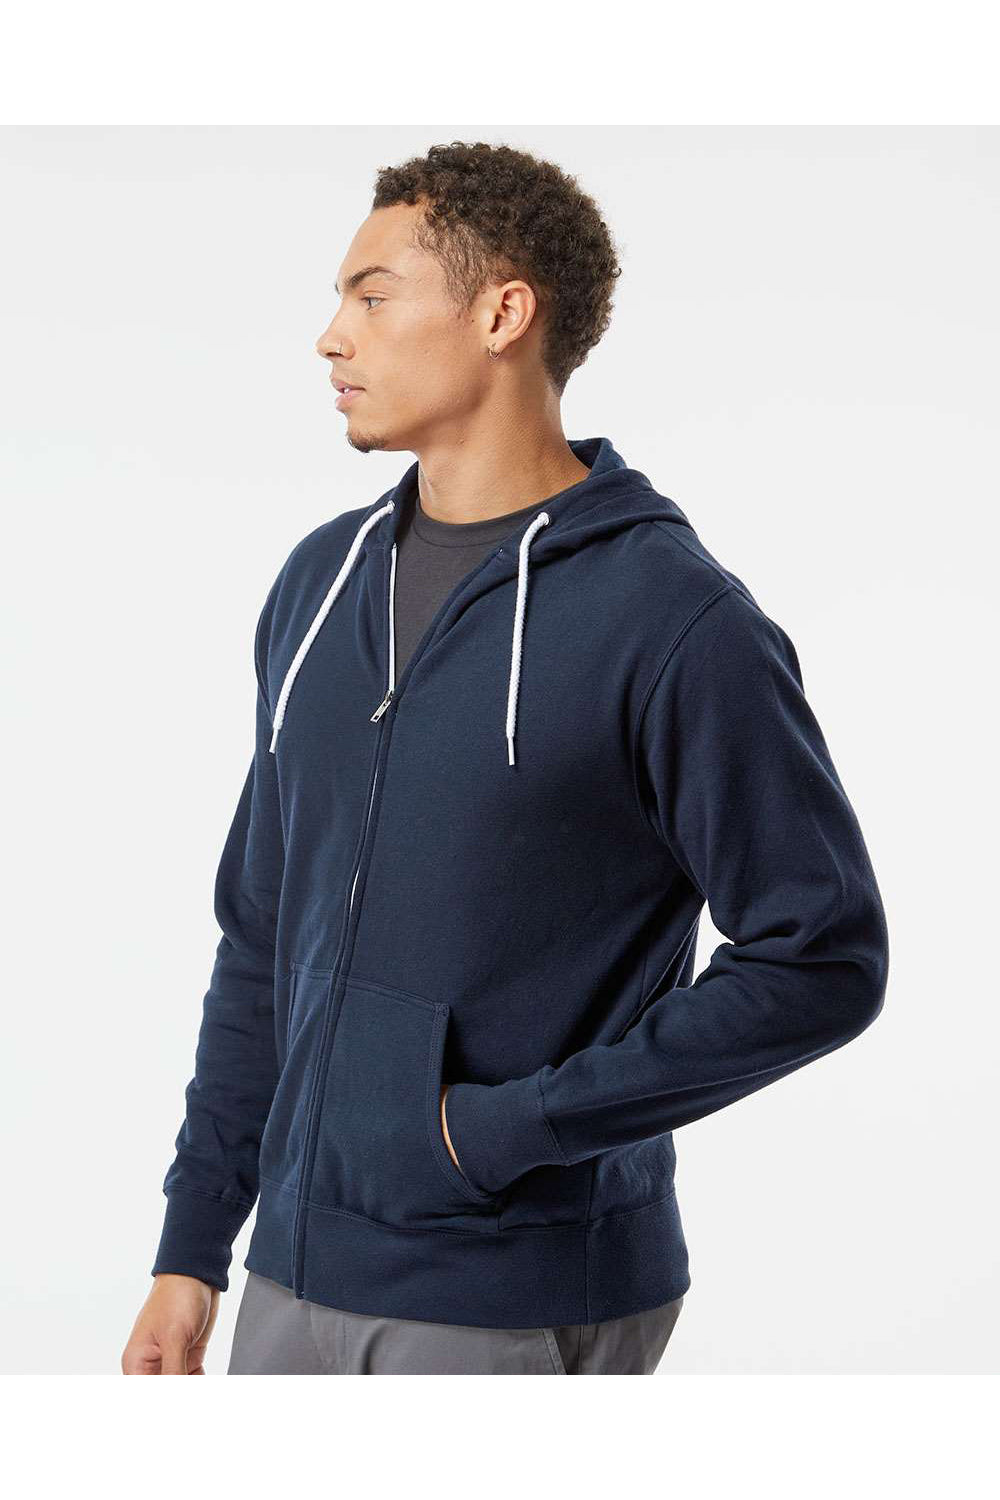 Independent Trading Co. AFX90UNZ Mens Full Zip Hooded Sweatshirt Hoodie Classic Navy Blue Model Side